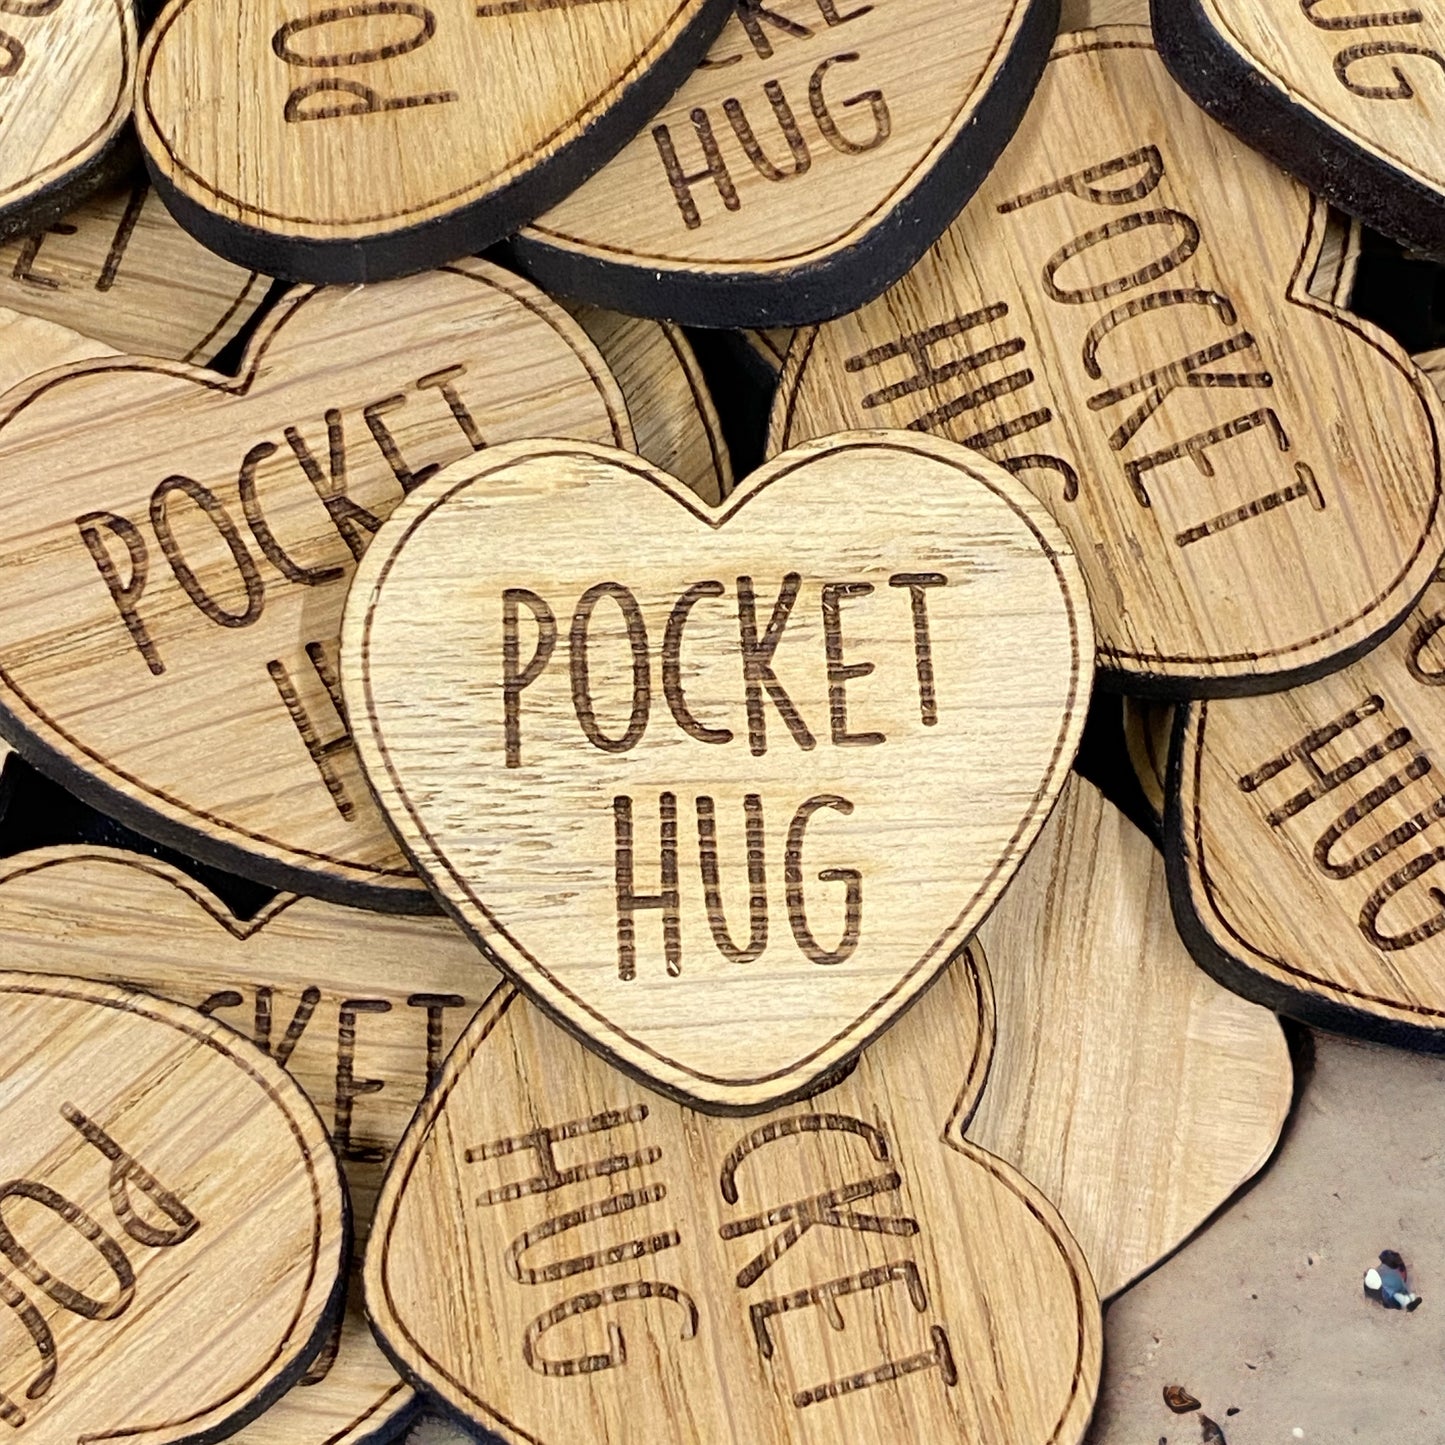 Little Wooden Pocket Heart Shaped Hug Tokens - Bulk Wholesale